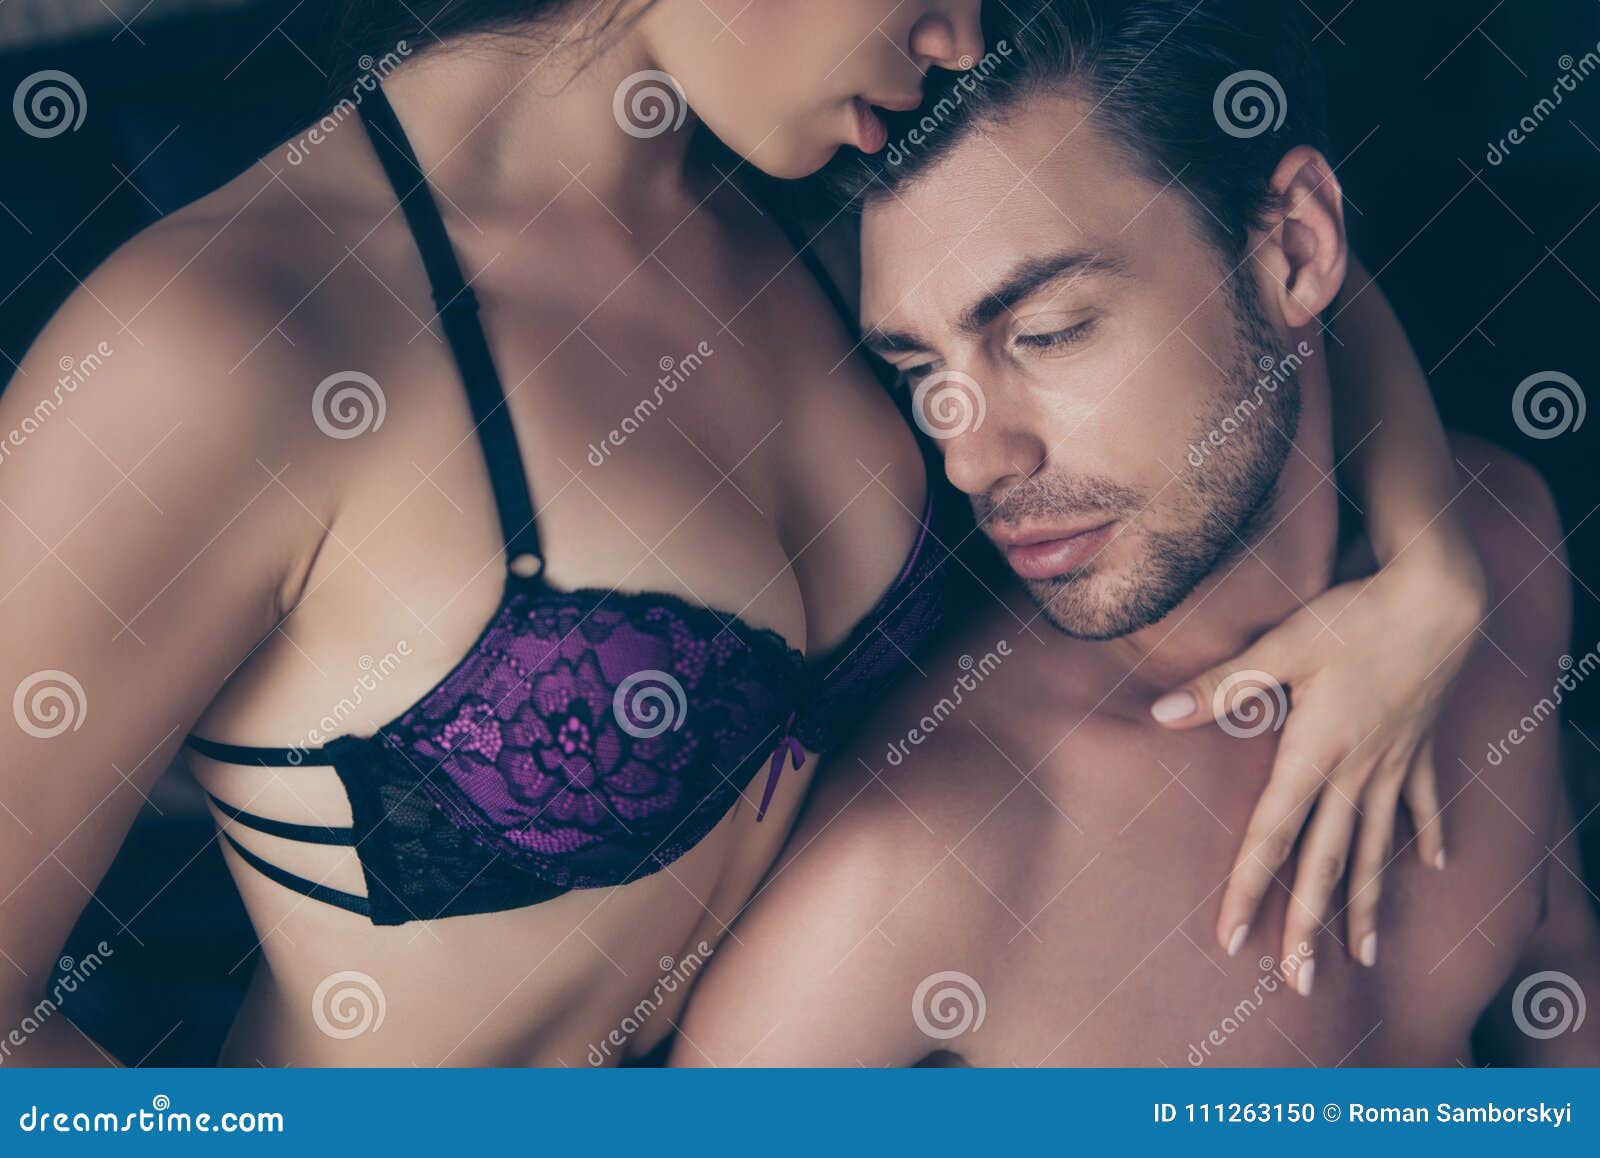 Boy Sex In Girl Tit